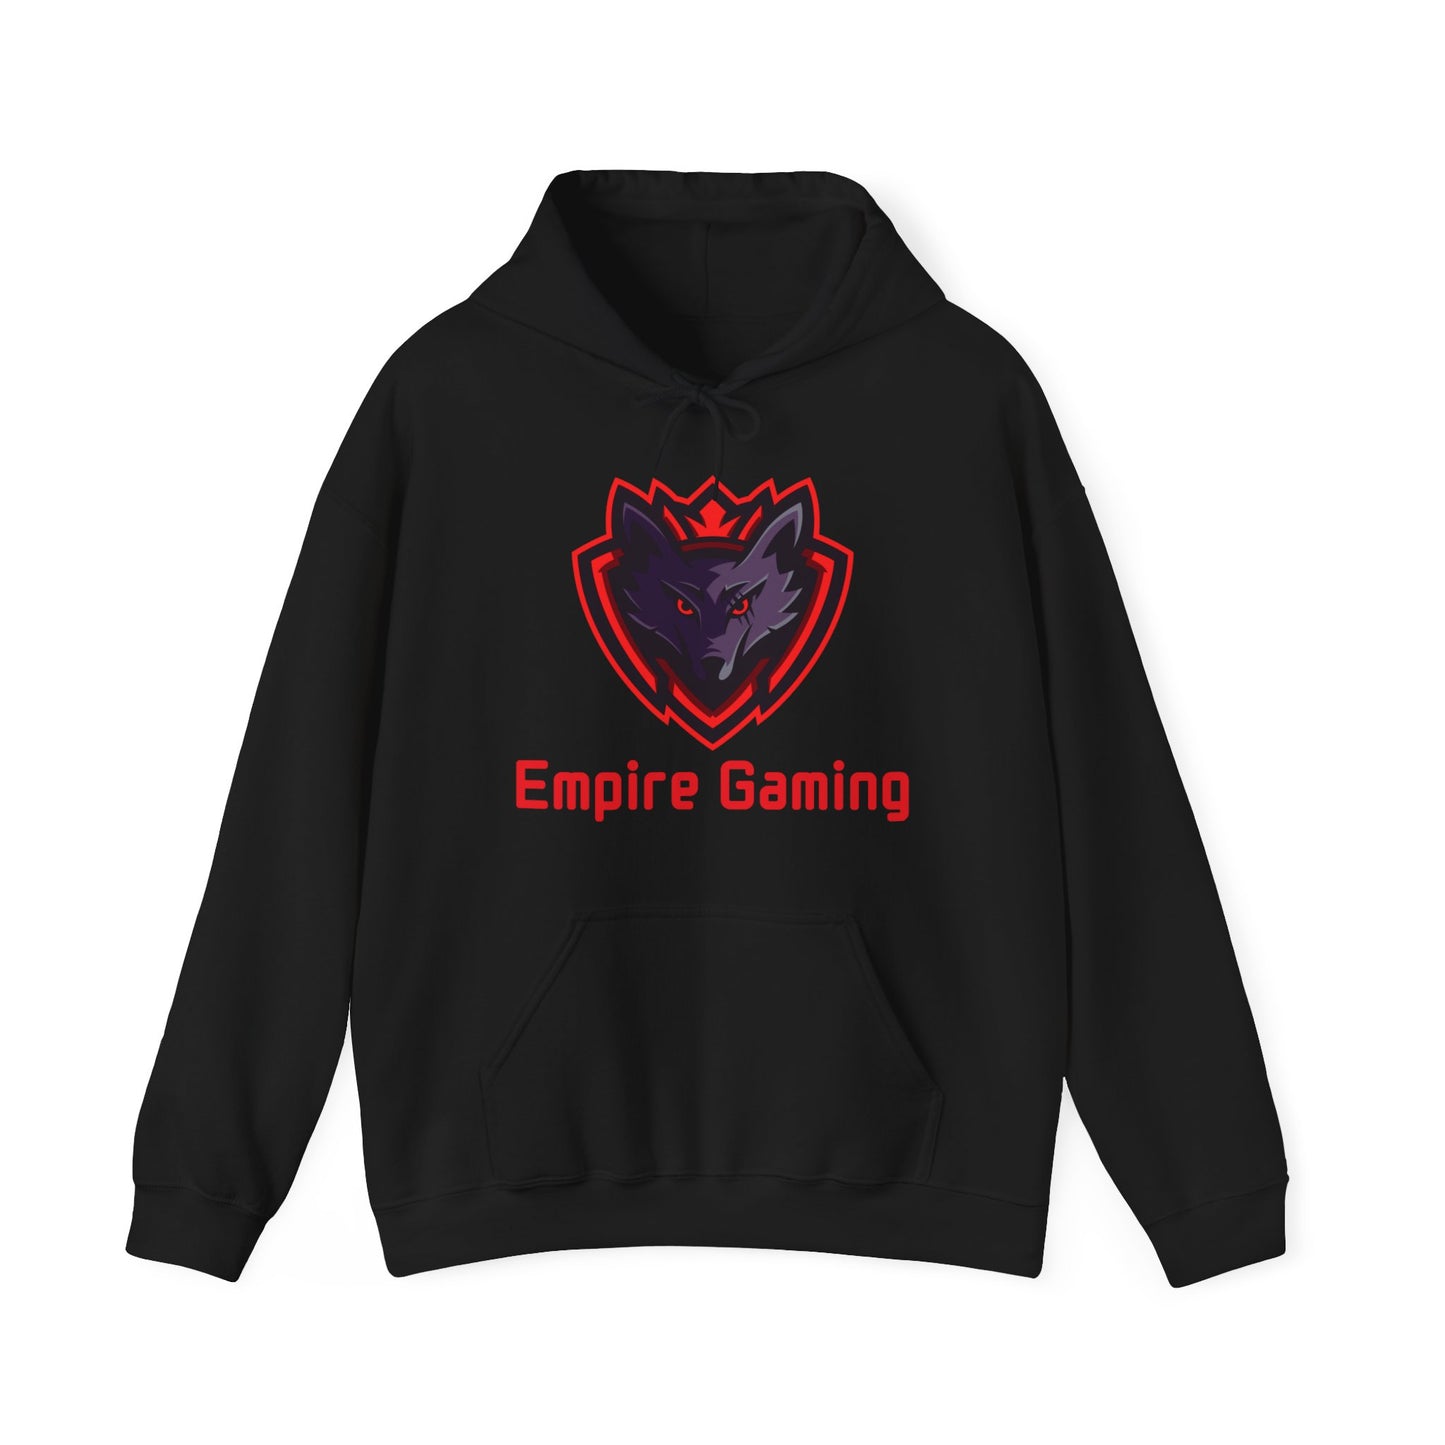 Empire Gaming Hooded Sweatshirt